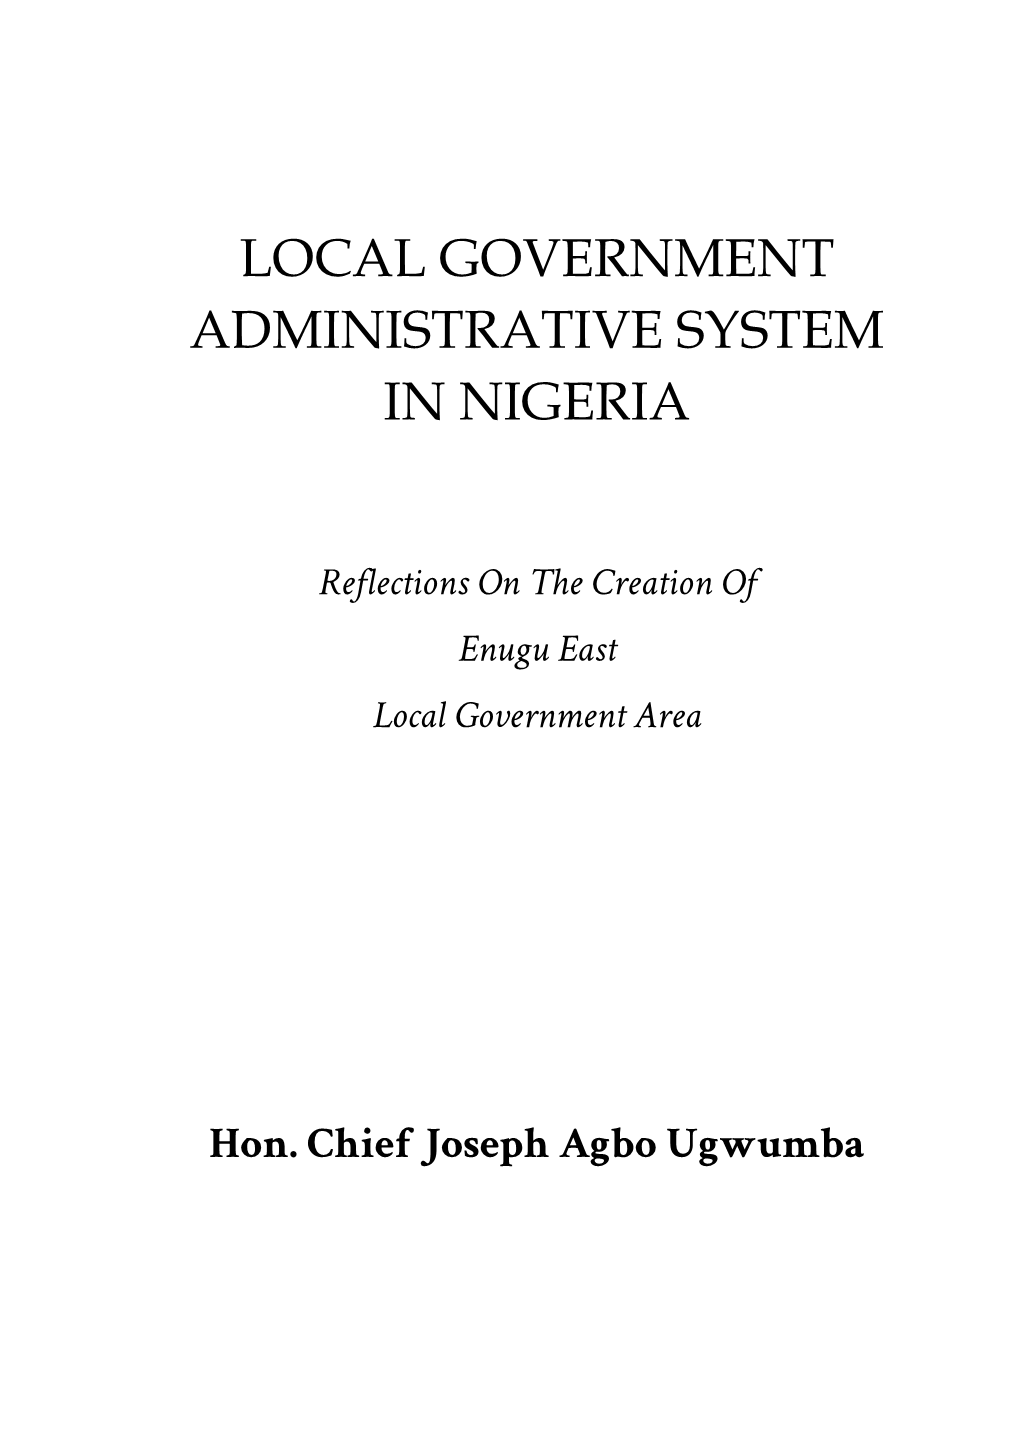 Local Government Administrative System in Nigeria